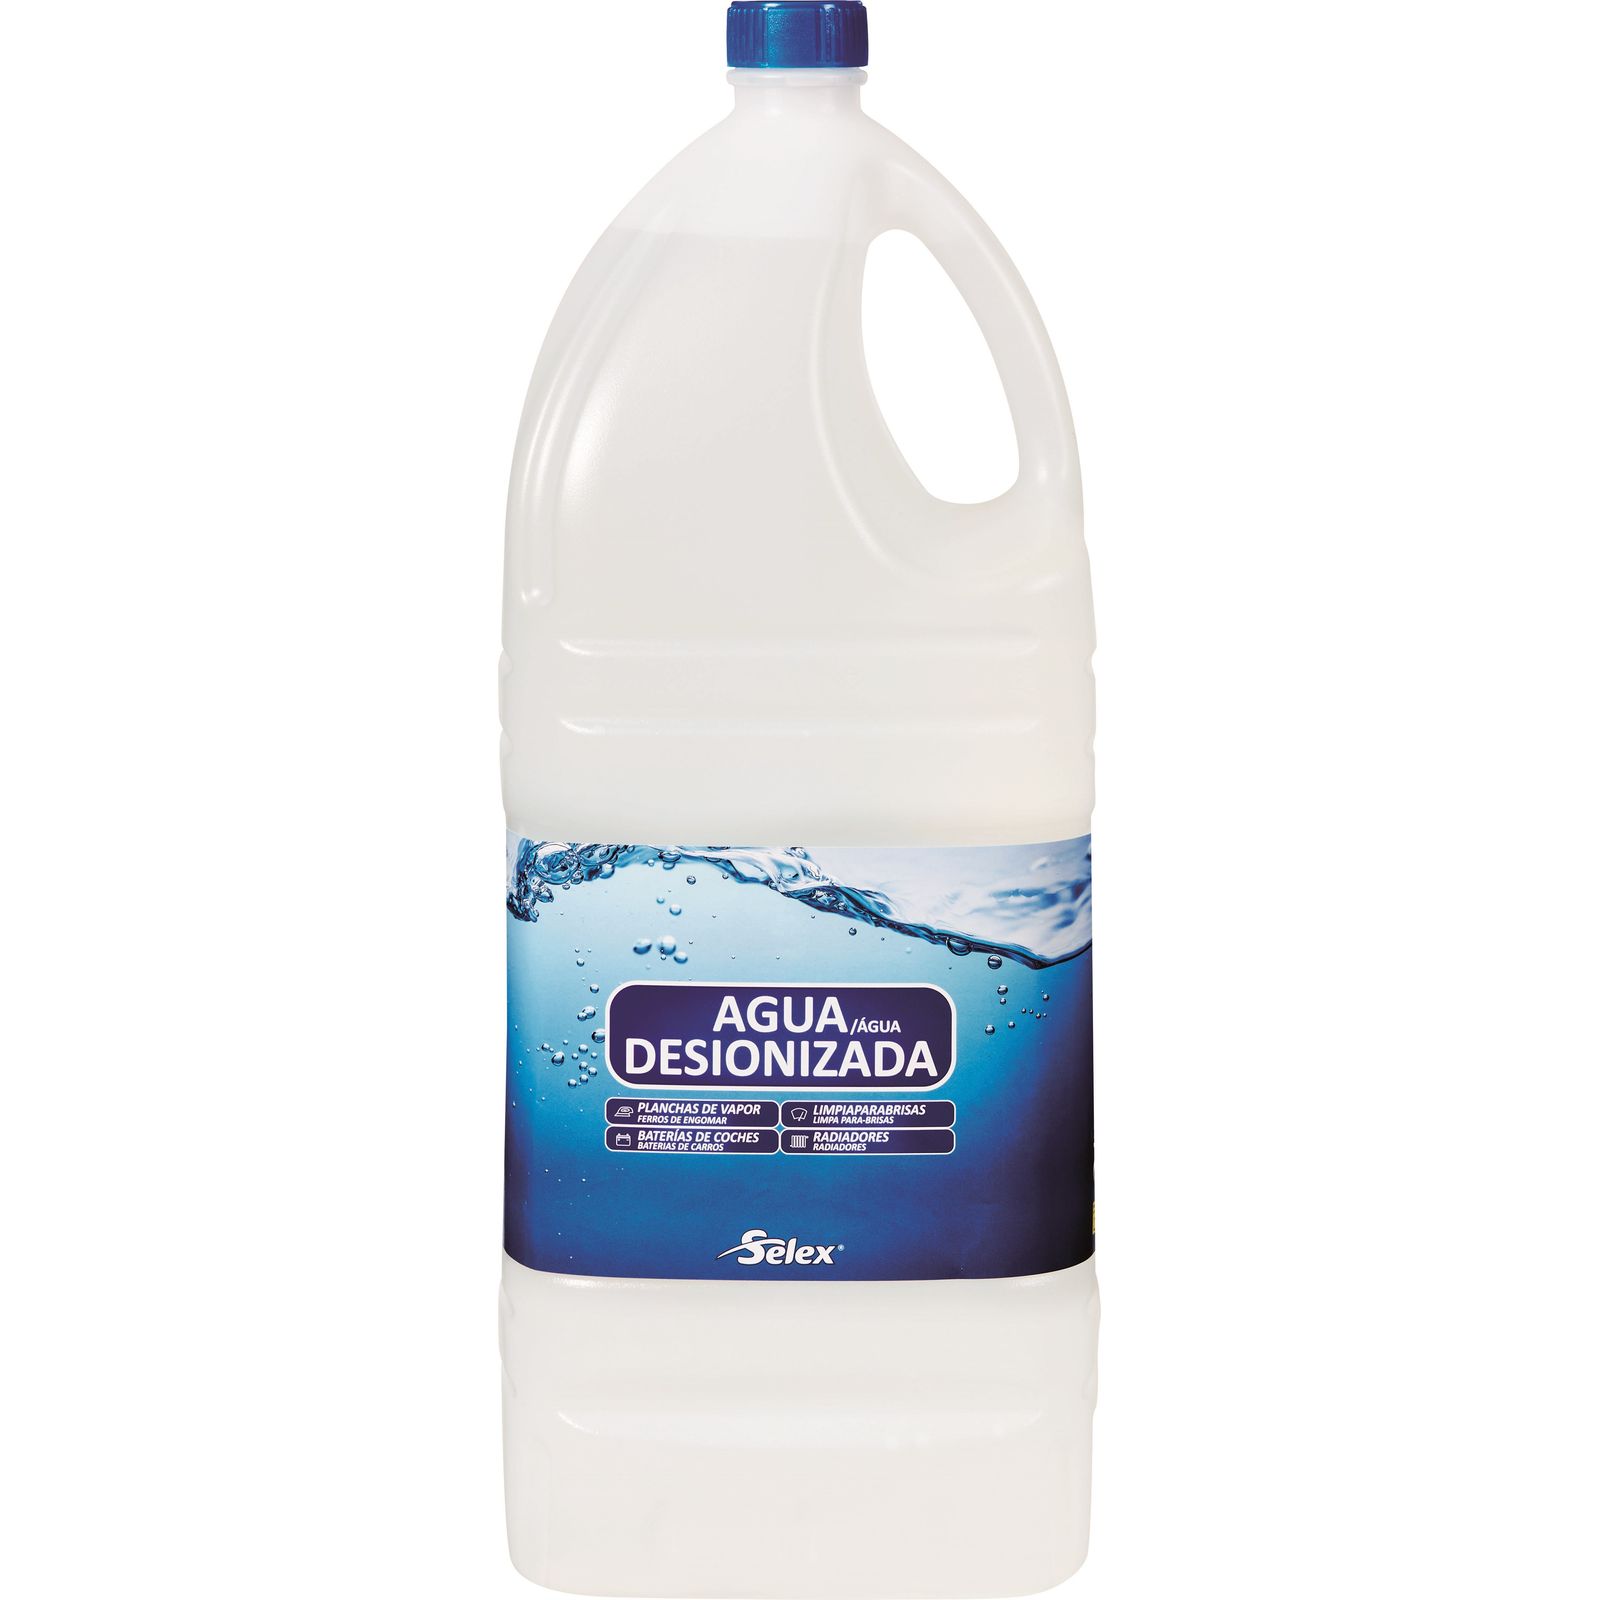 Agua mineral Carrefour 5 l.